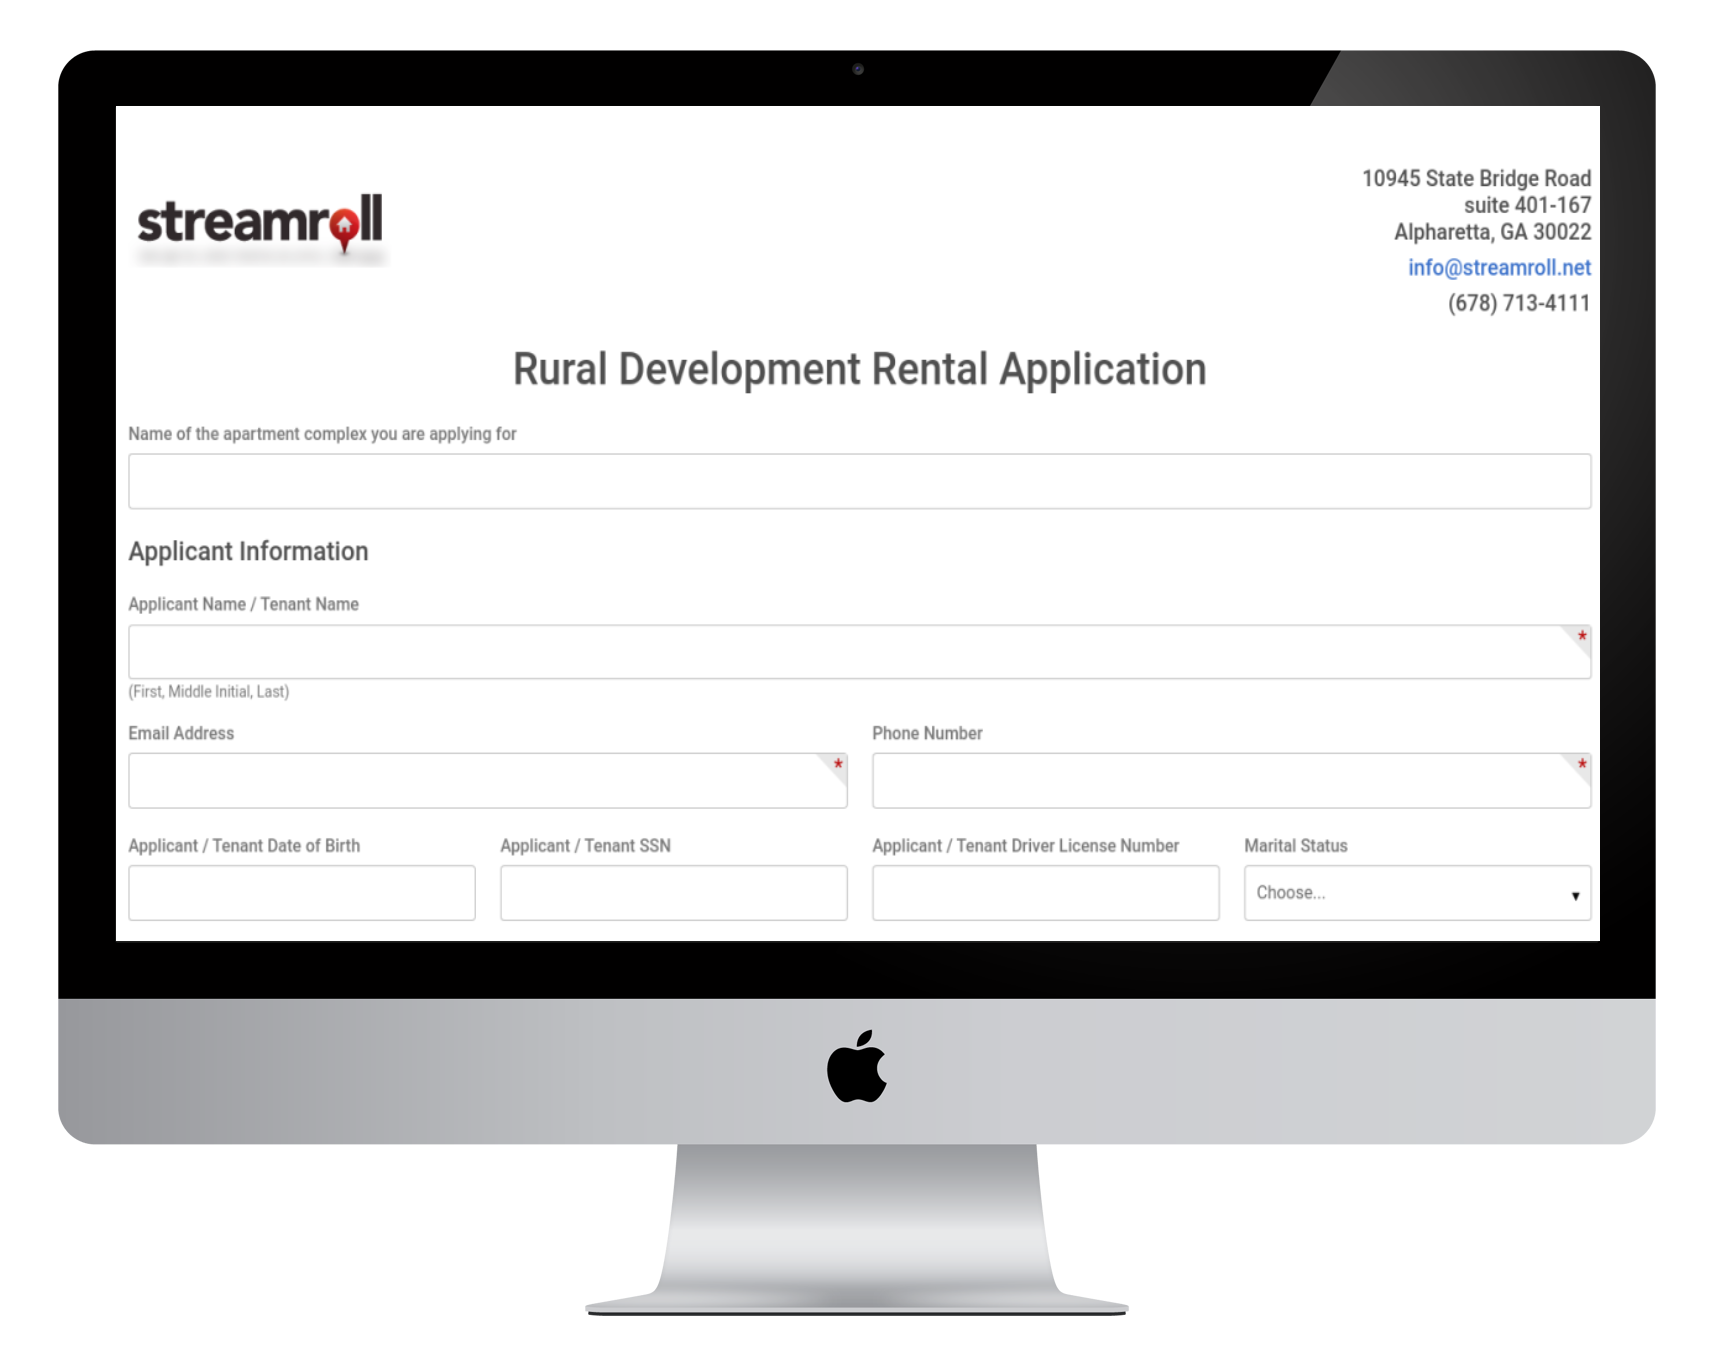 WebForms | Streamroll on Desktop